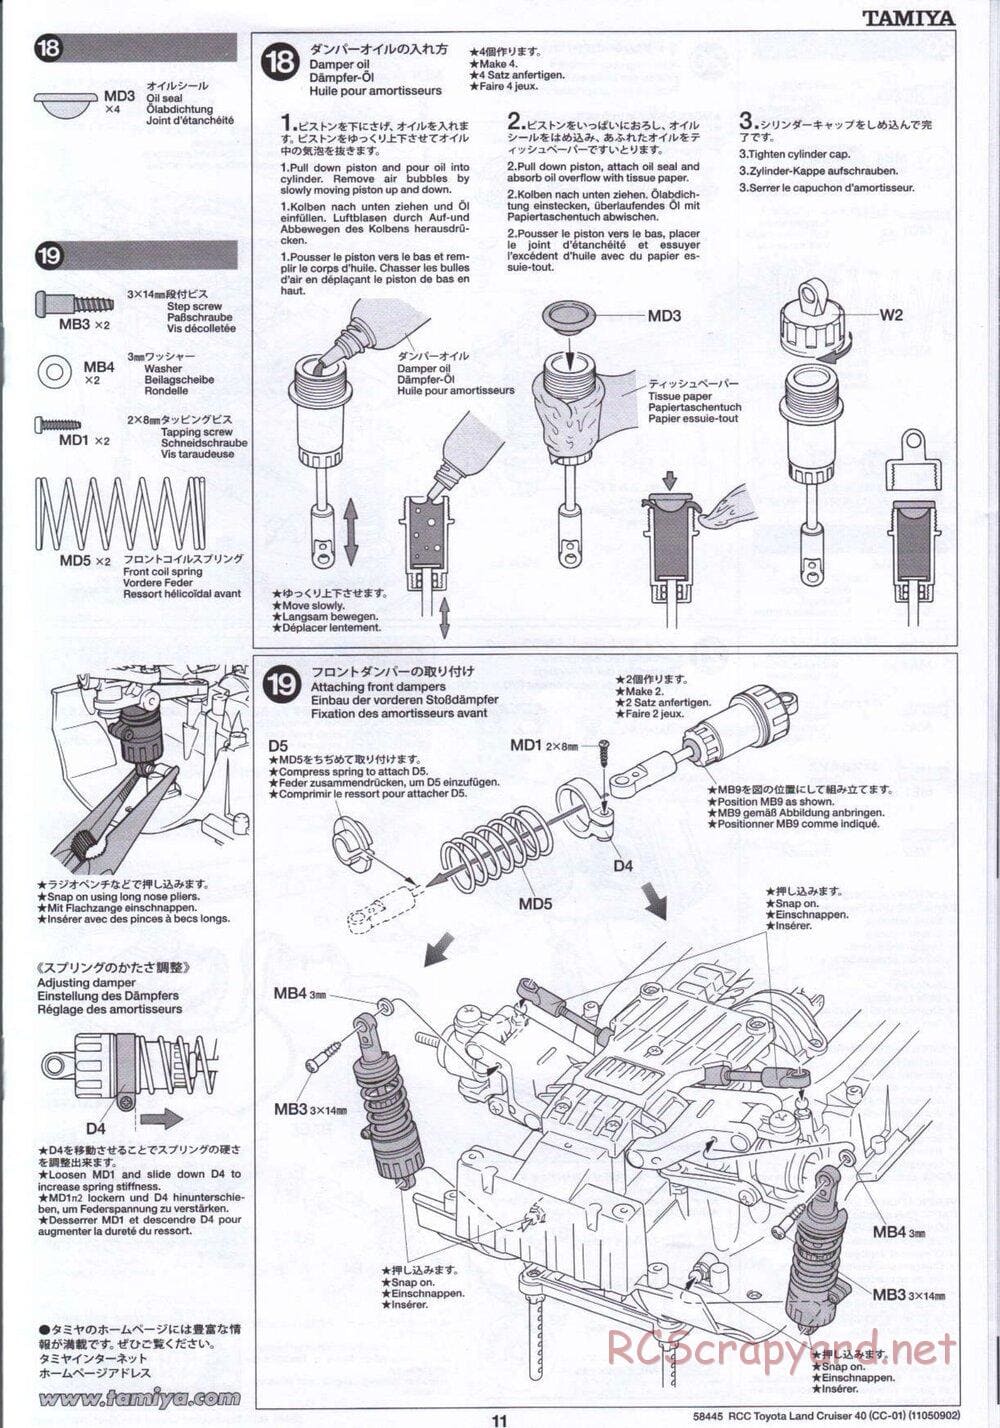 Tamiya - Toyota Land Cruiser 40 - CC-01 Chassis - Manual - Page 11